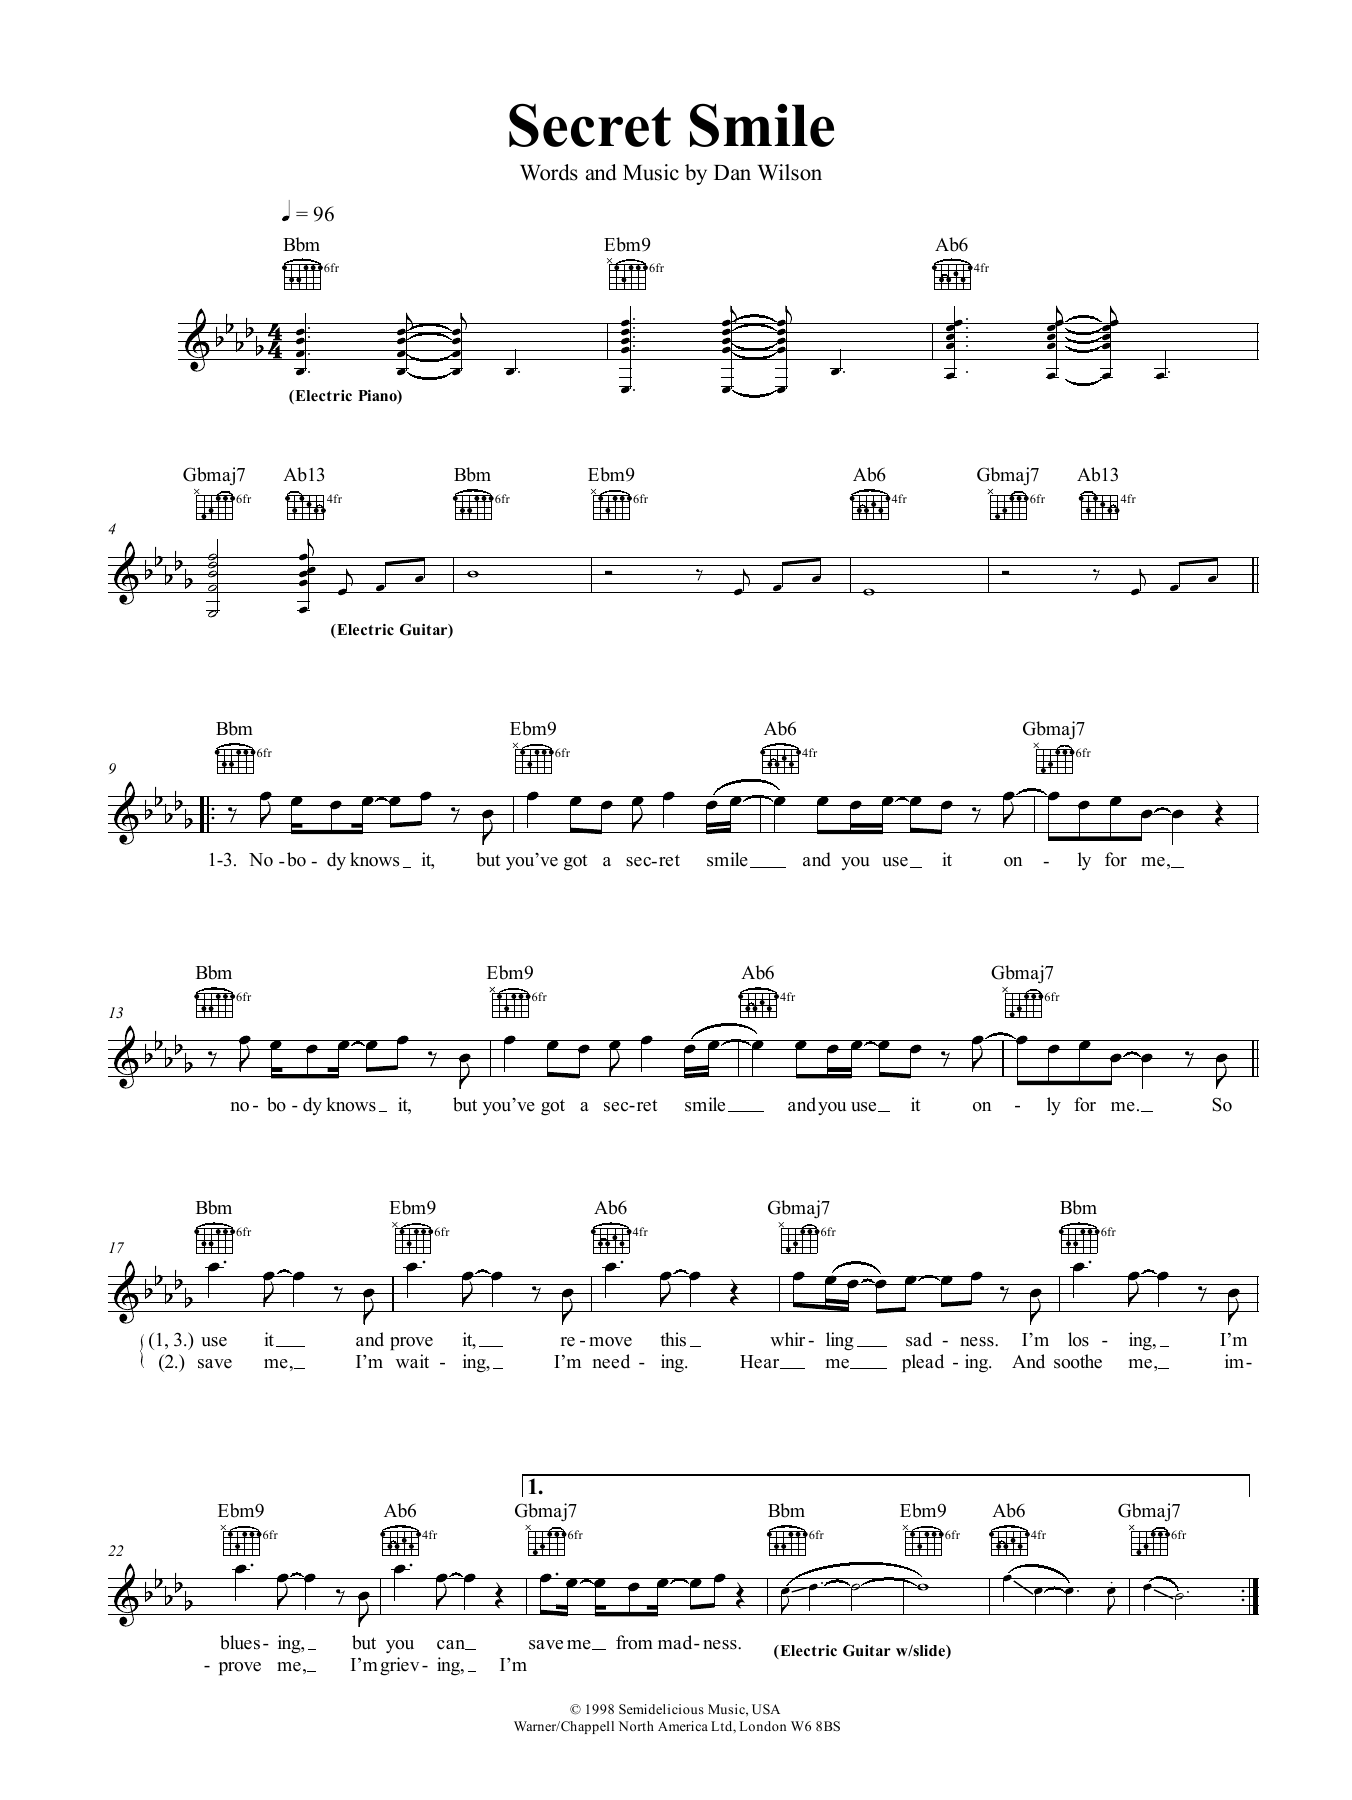 Semisonic Secret Smile Sheet Music Notes & Chords for Lead Sheet / Fake Book - Download or Print PDF